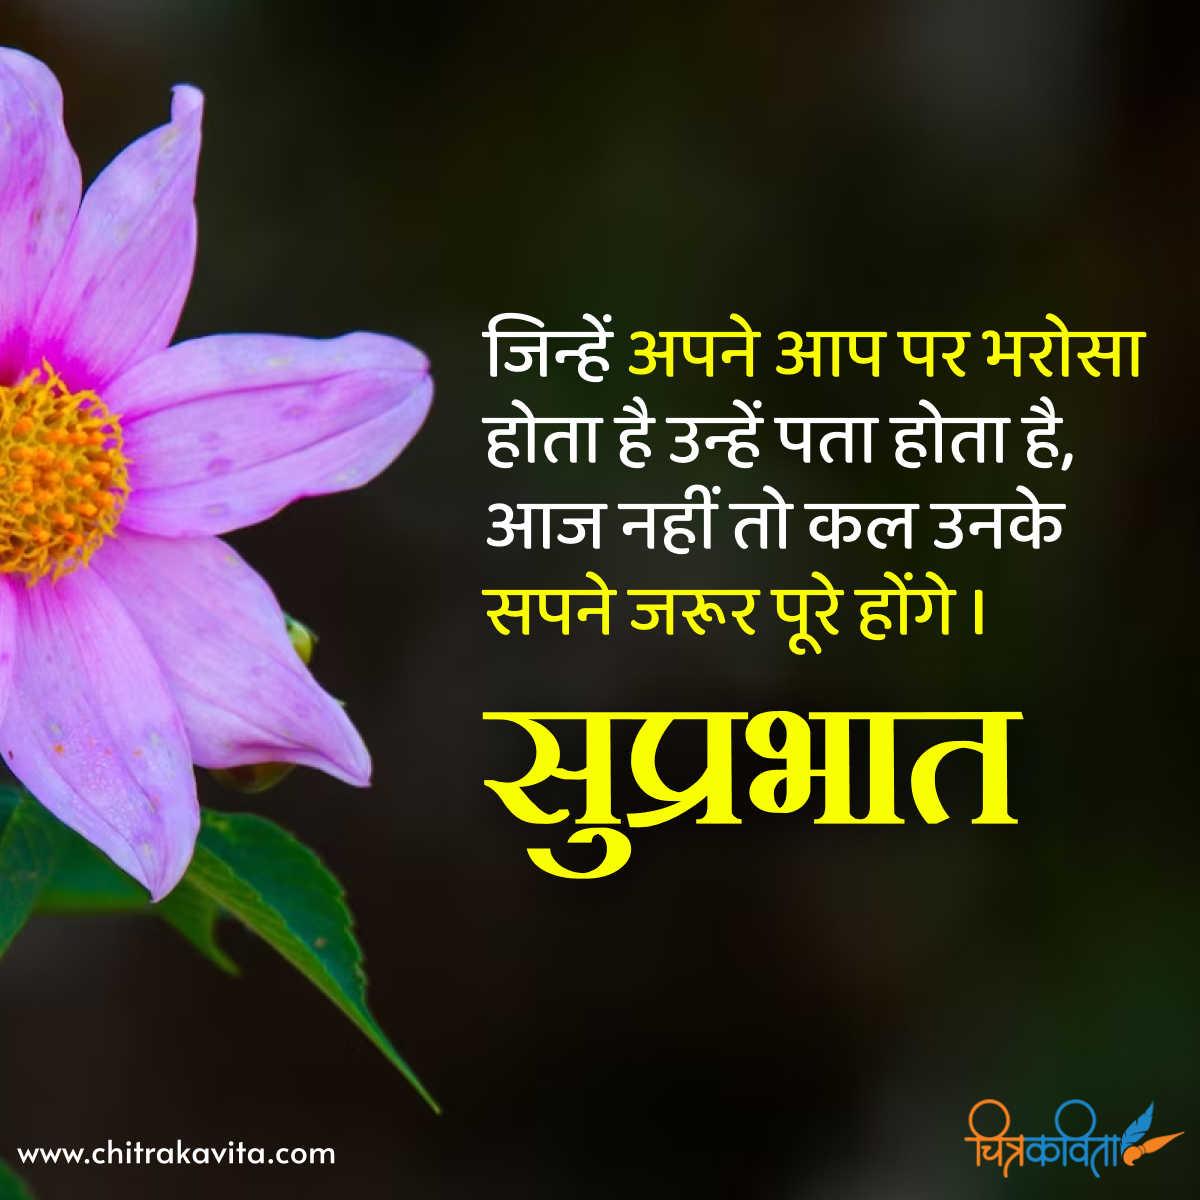 bharosa, hindi good morning quotes, good morning quotes in hindi, good morning status, suprabhat quotes